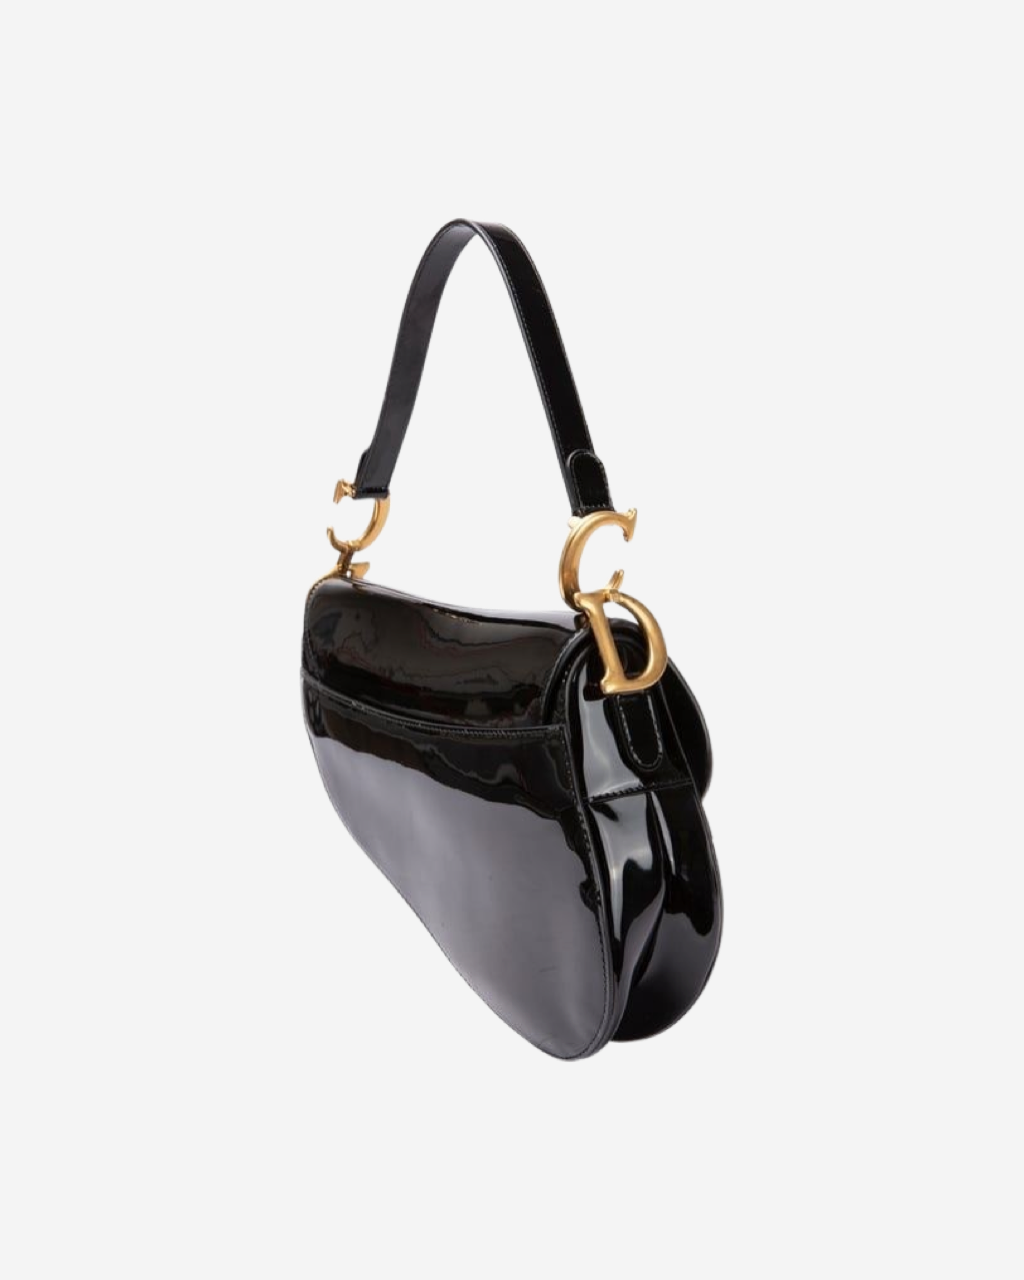 Dior Saddle Patent Leather Bag